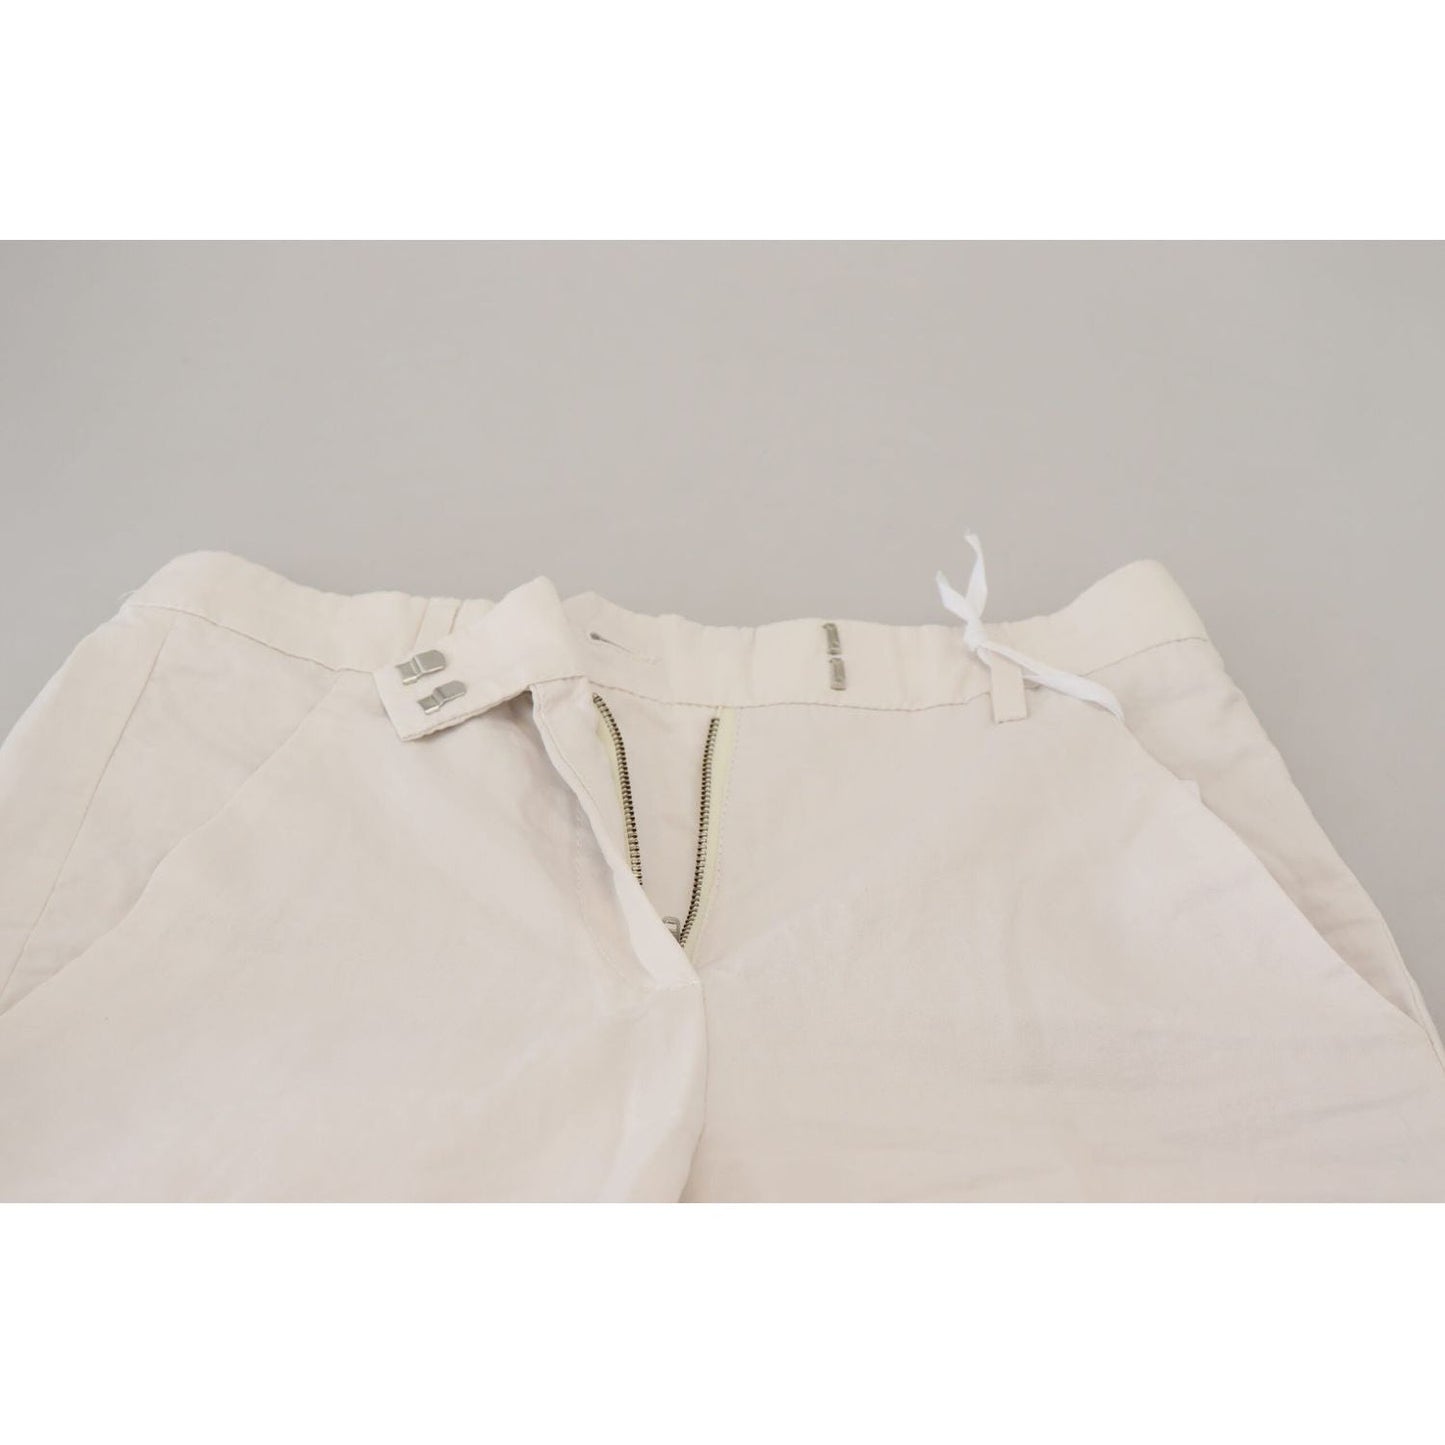 Dondup Elegant High Waist Tapered White Pants white-high-waist-tapered-women-pants